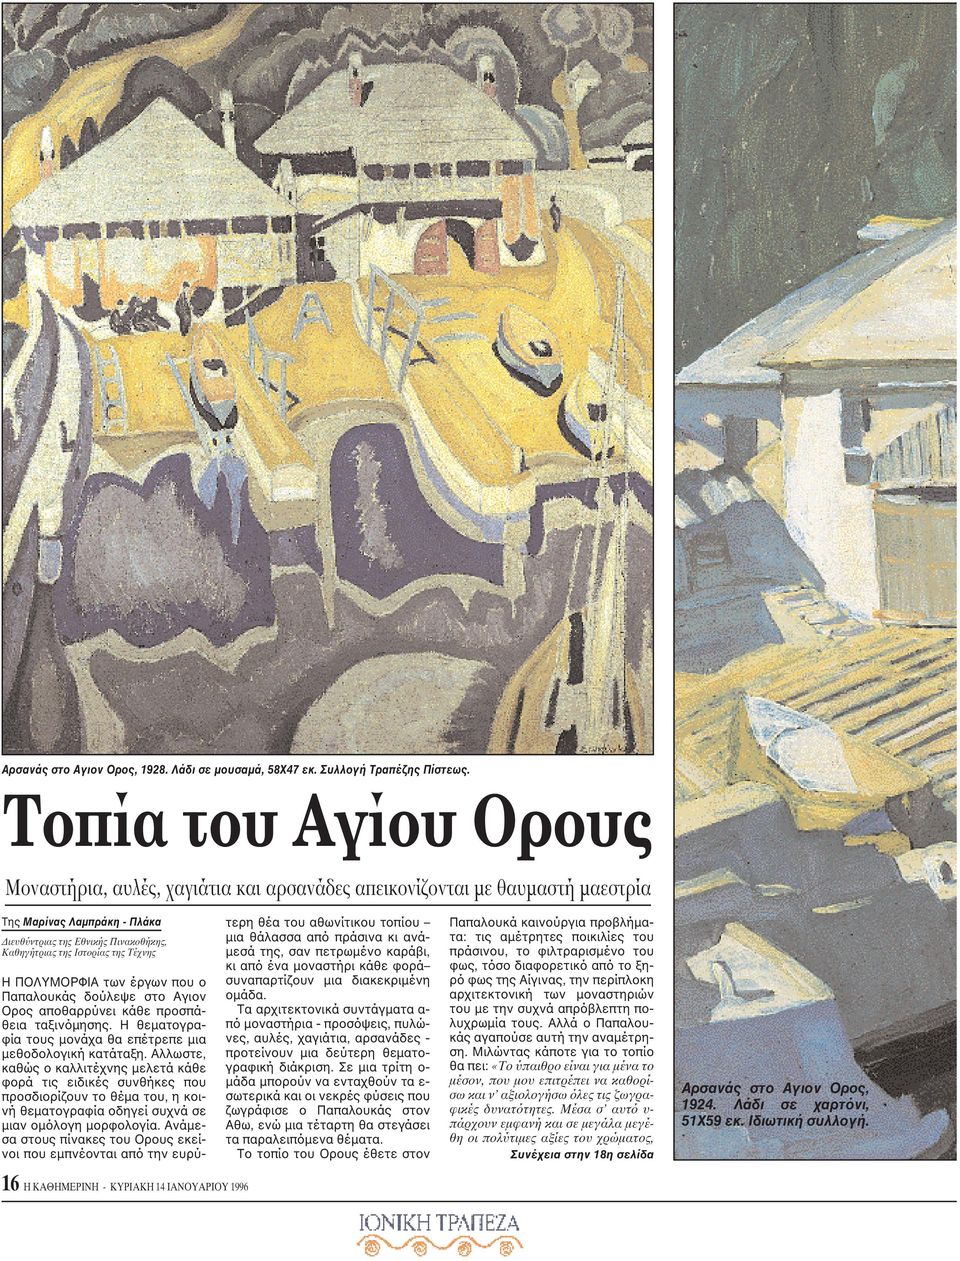 Tέχνης H ΠOΛYMOPΦIA των έργων που ο Παπαλουκάς δούλεψε στο Aγιον Oρος αποθαρρύνει κάθε προσπάθεια ταξινόμησης. H θεματογραφία τους μονάχα θα επέτρεπε μια μεθοδολογική κατάταξη.